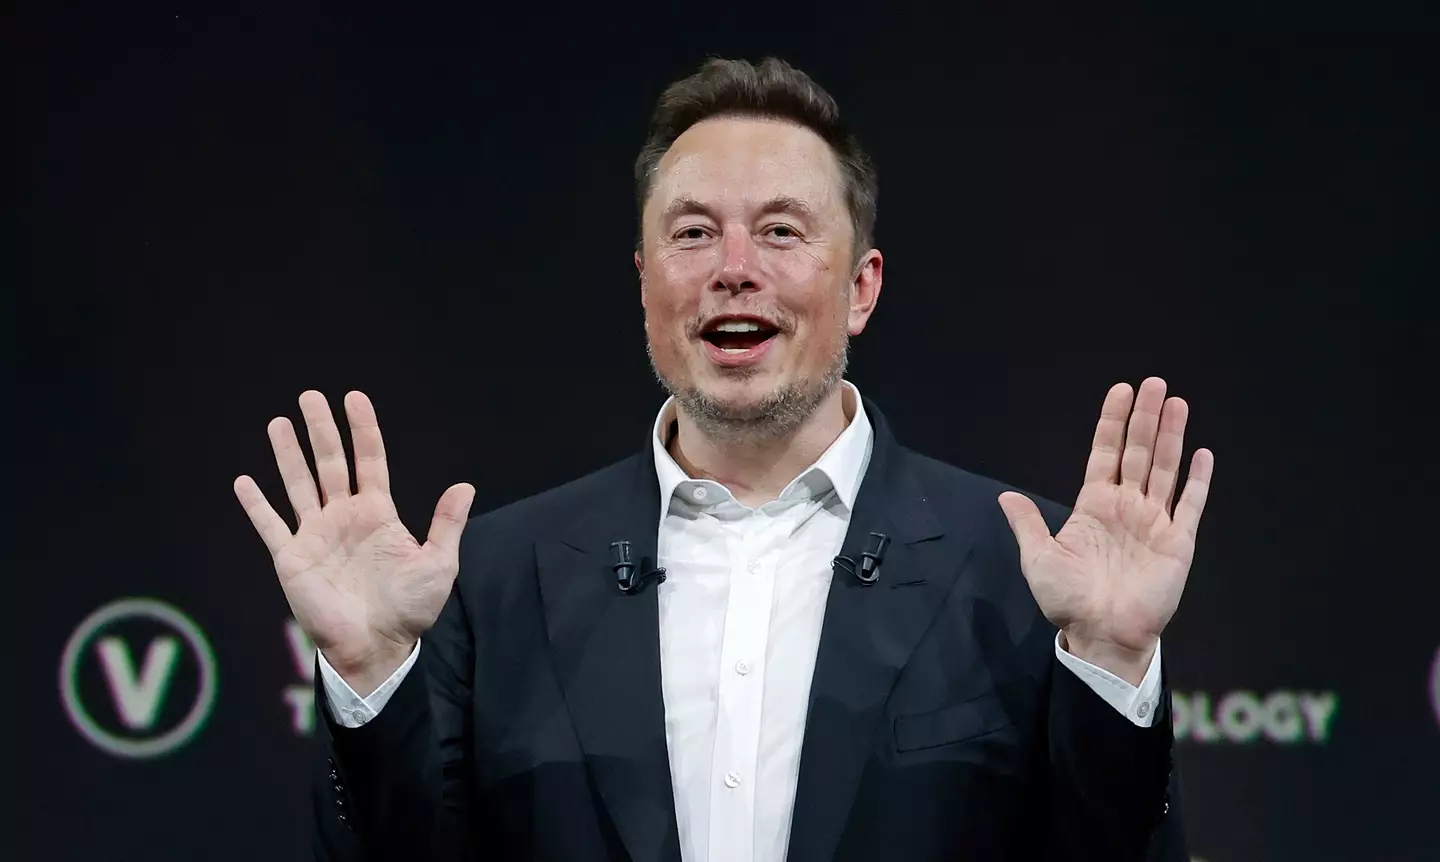 Elon Musk has been called 'weak' by critics.